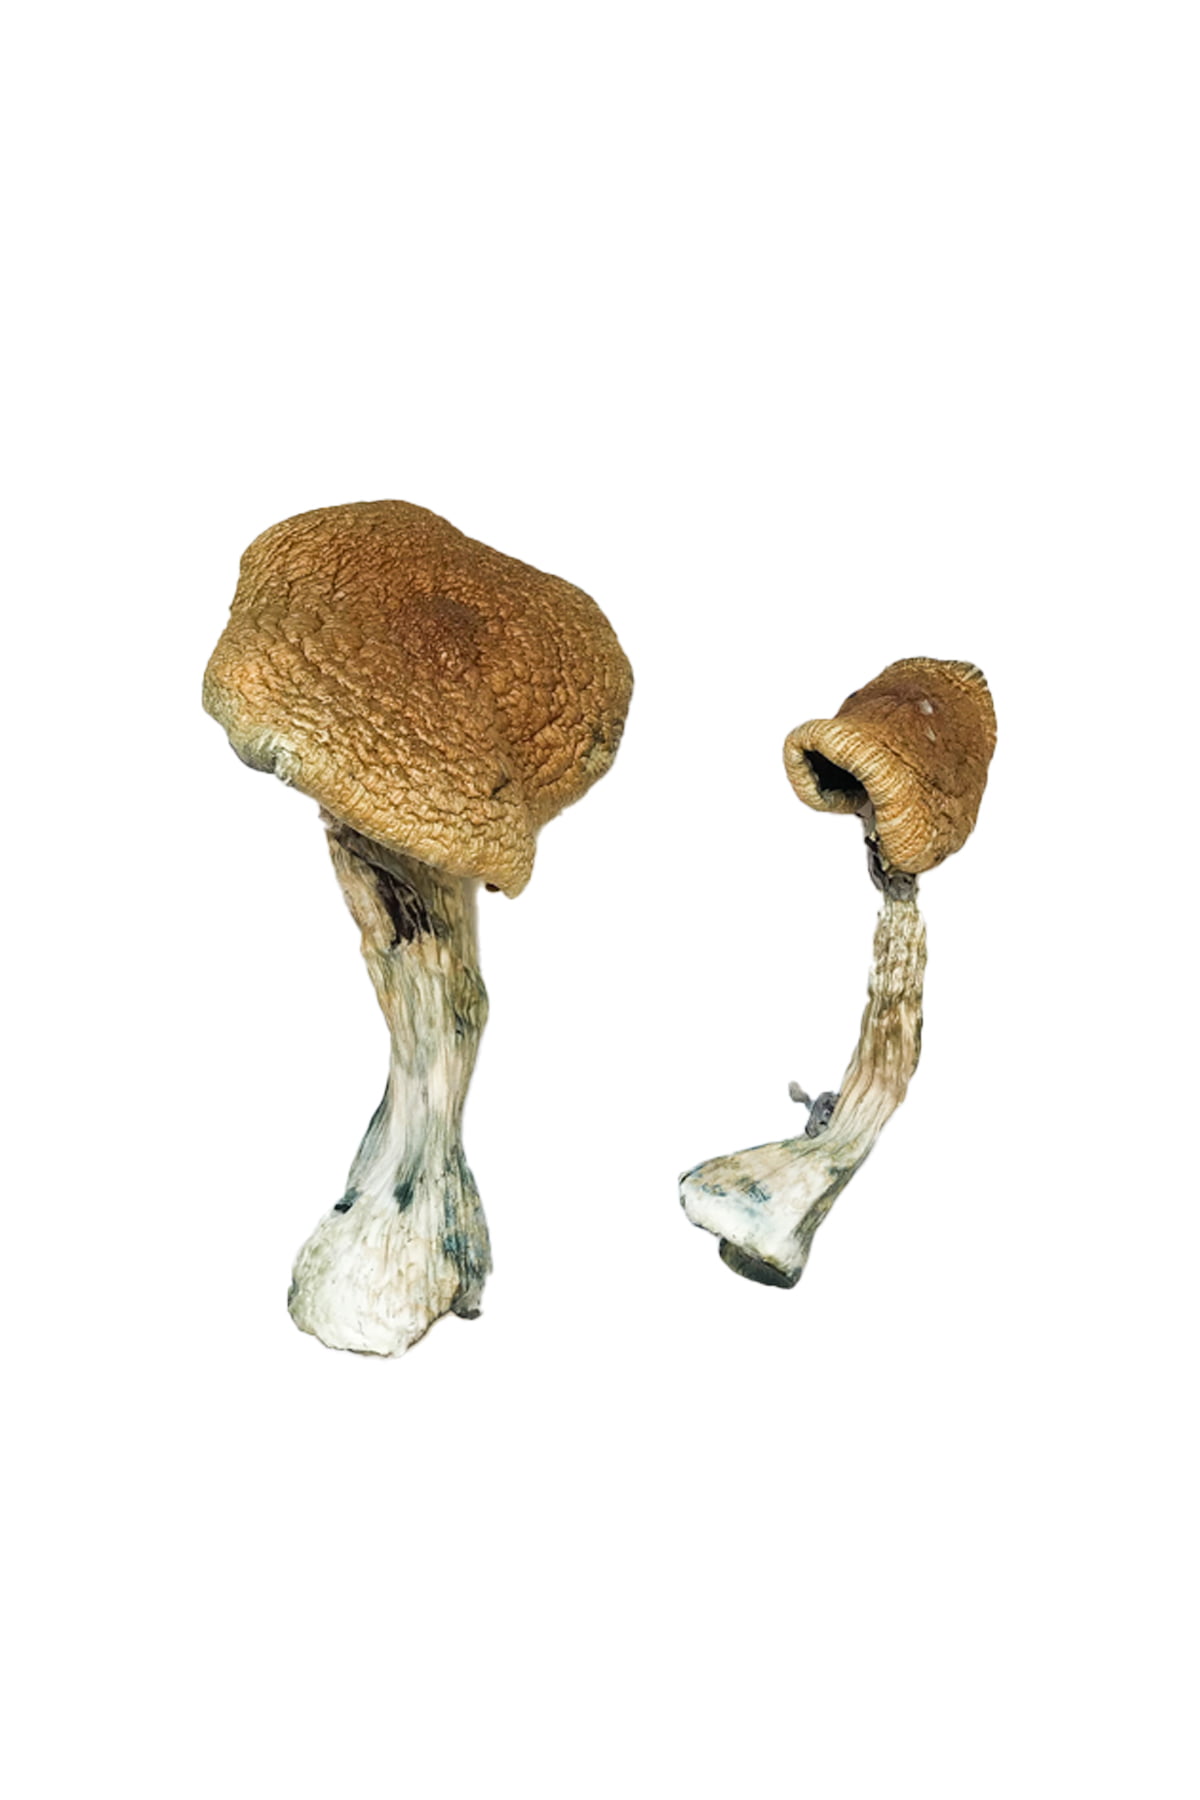 Buy Texas Yellow Cap Magic Mushrooms online In Canada